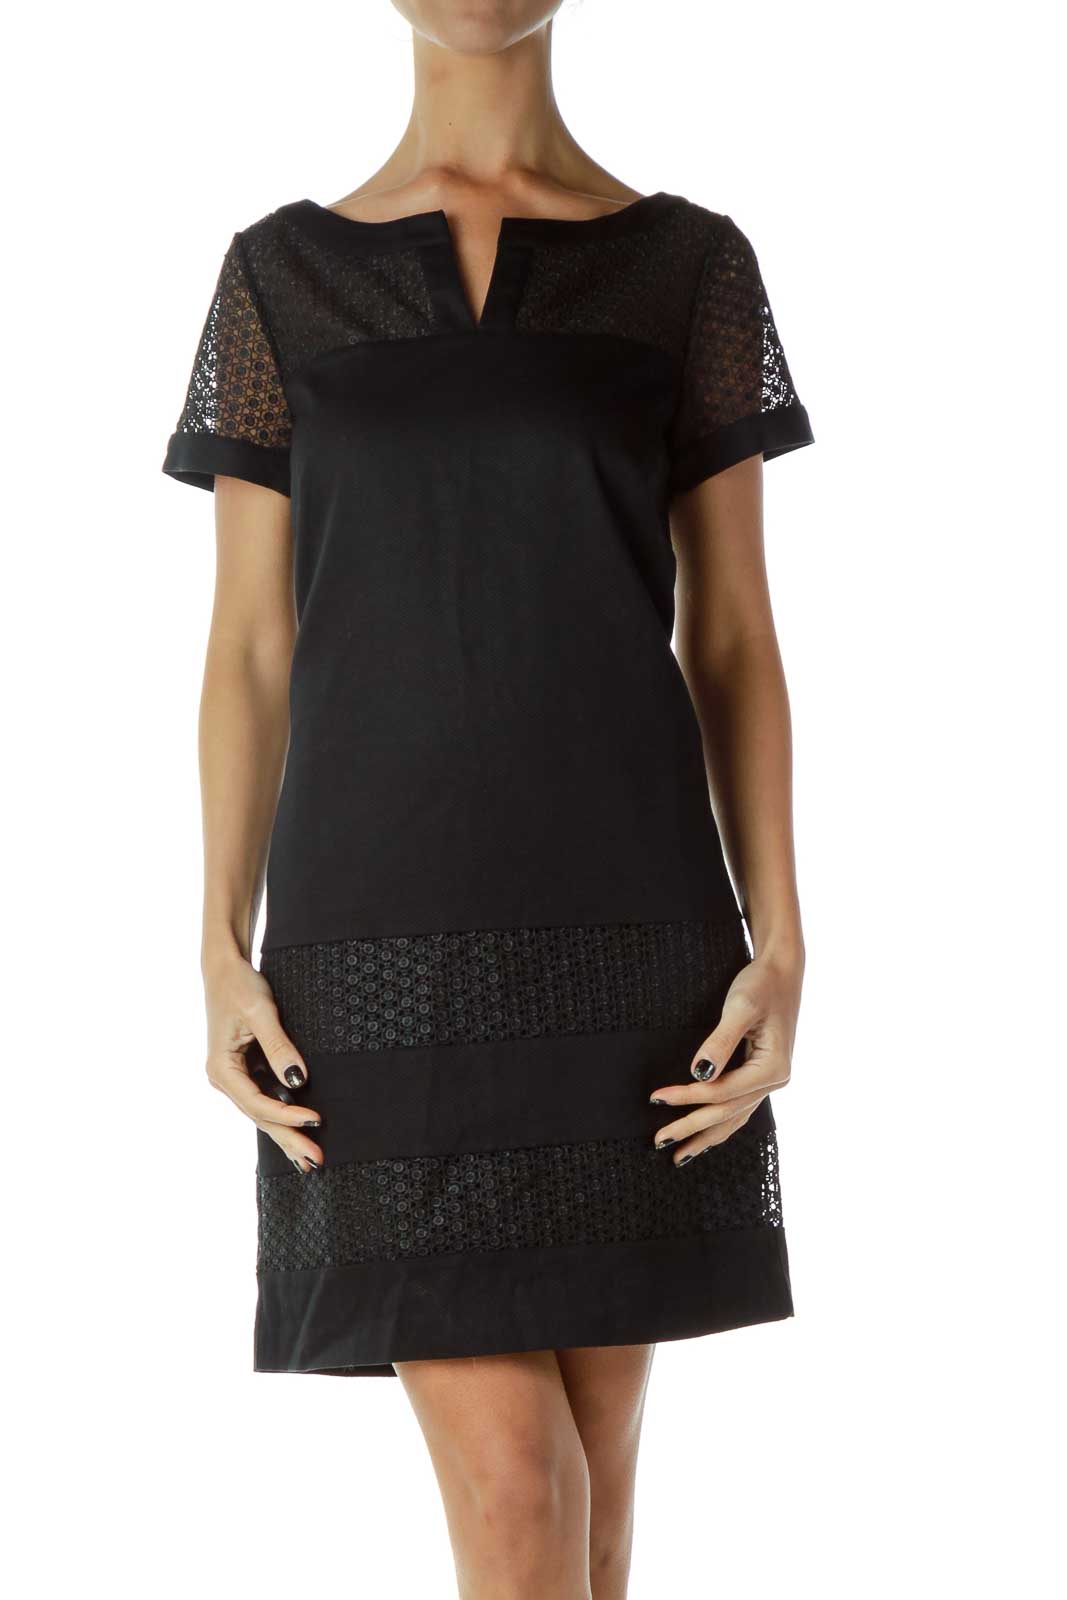 Black Crocheted Shift Dress Front